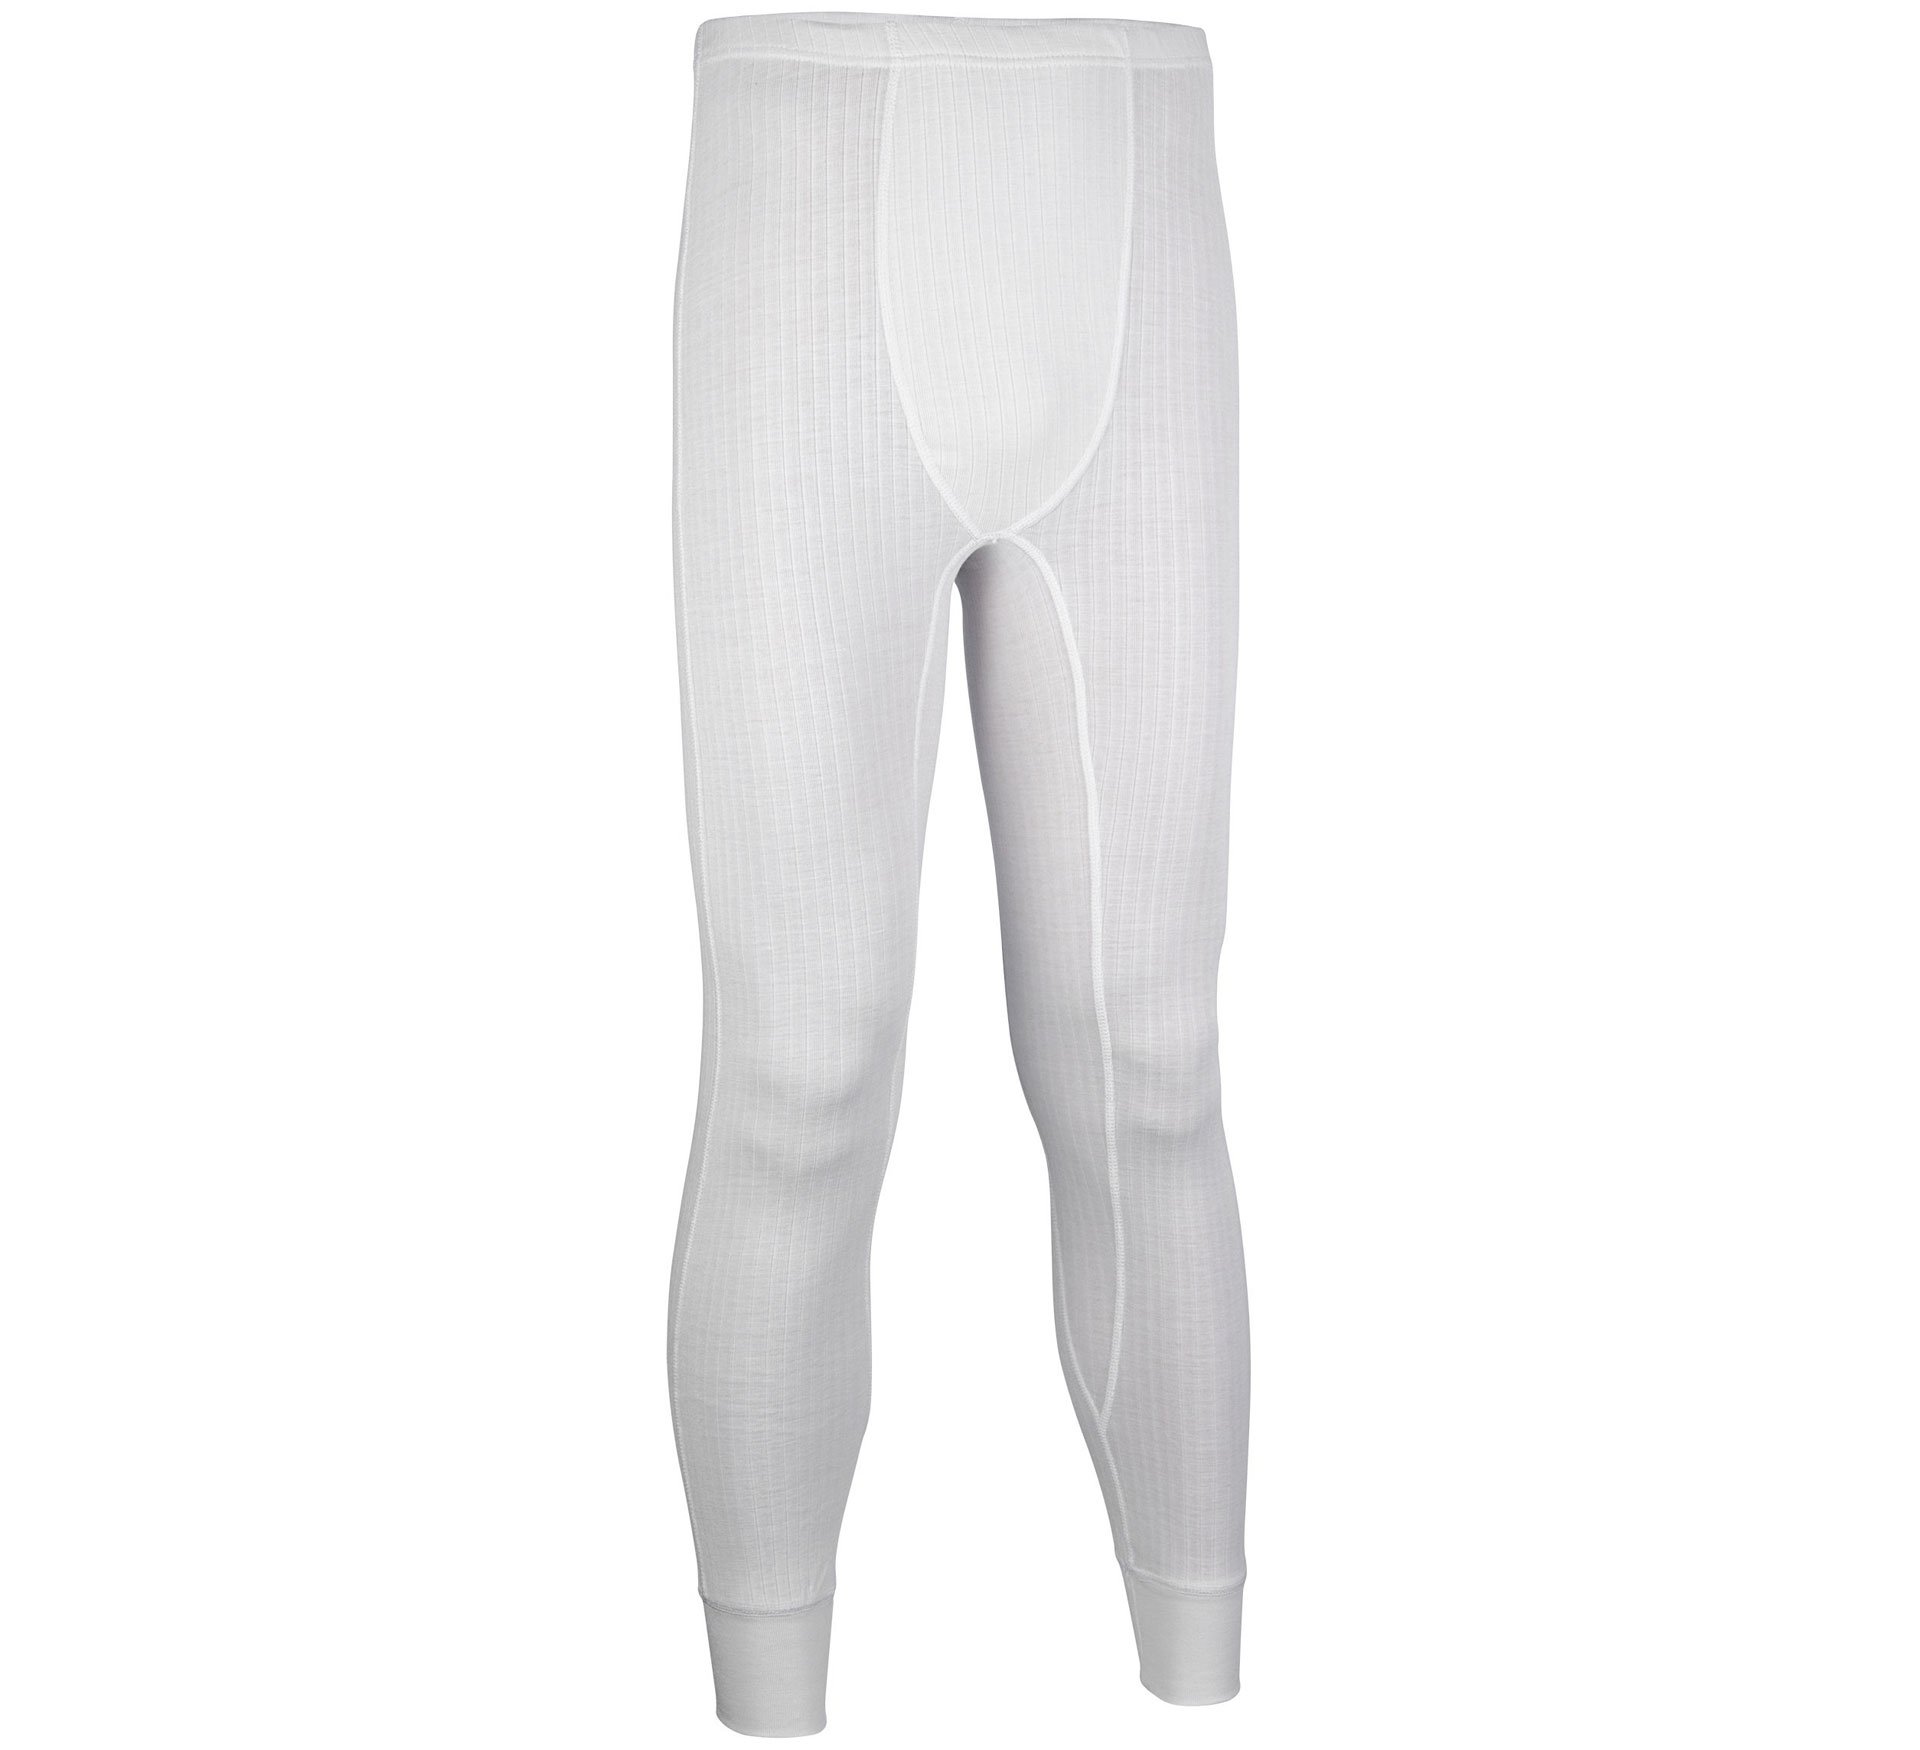 Avento Basic Thermo pantalon (2-pack)